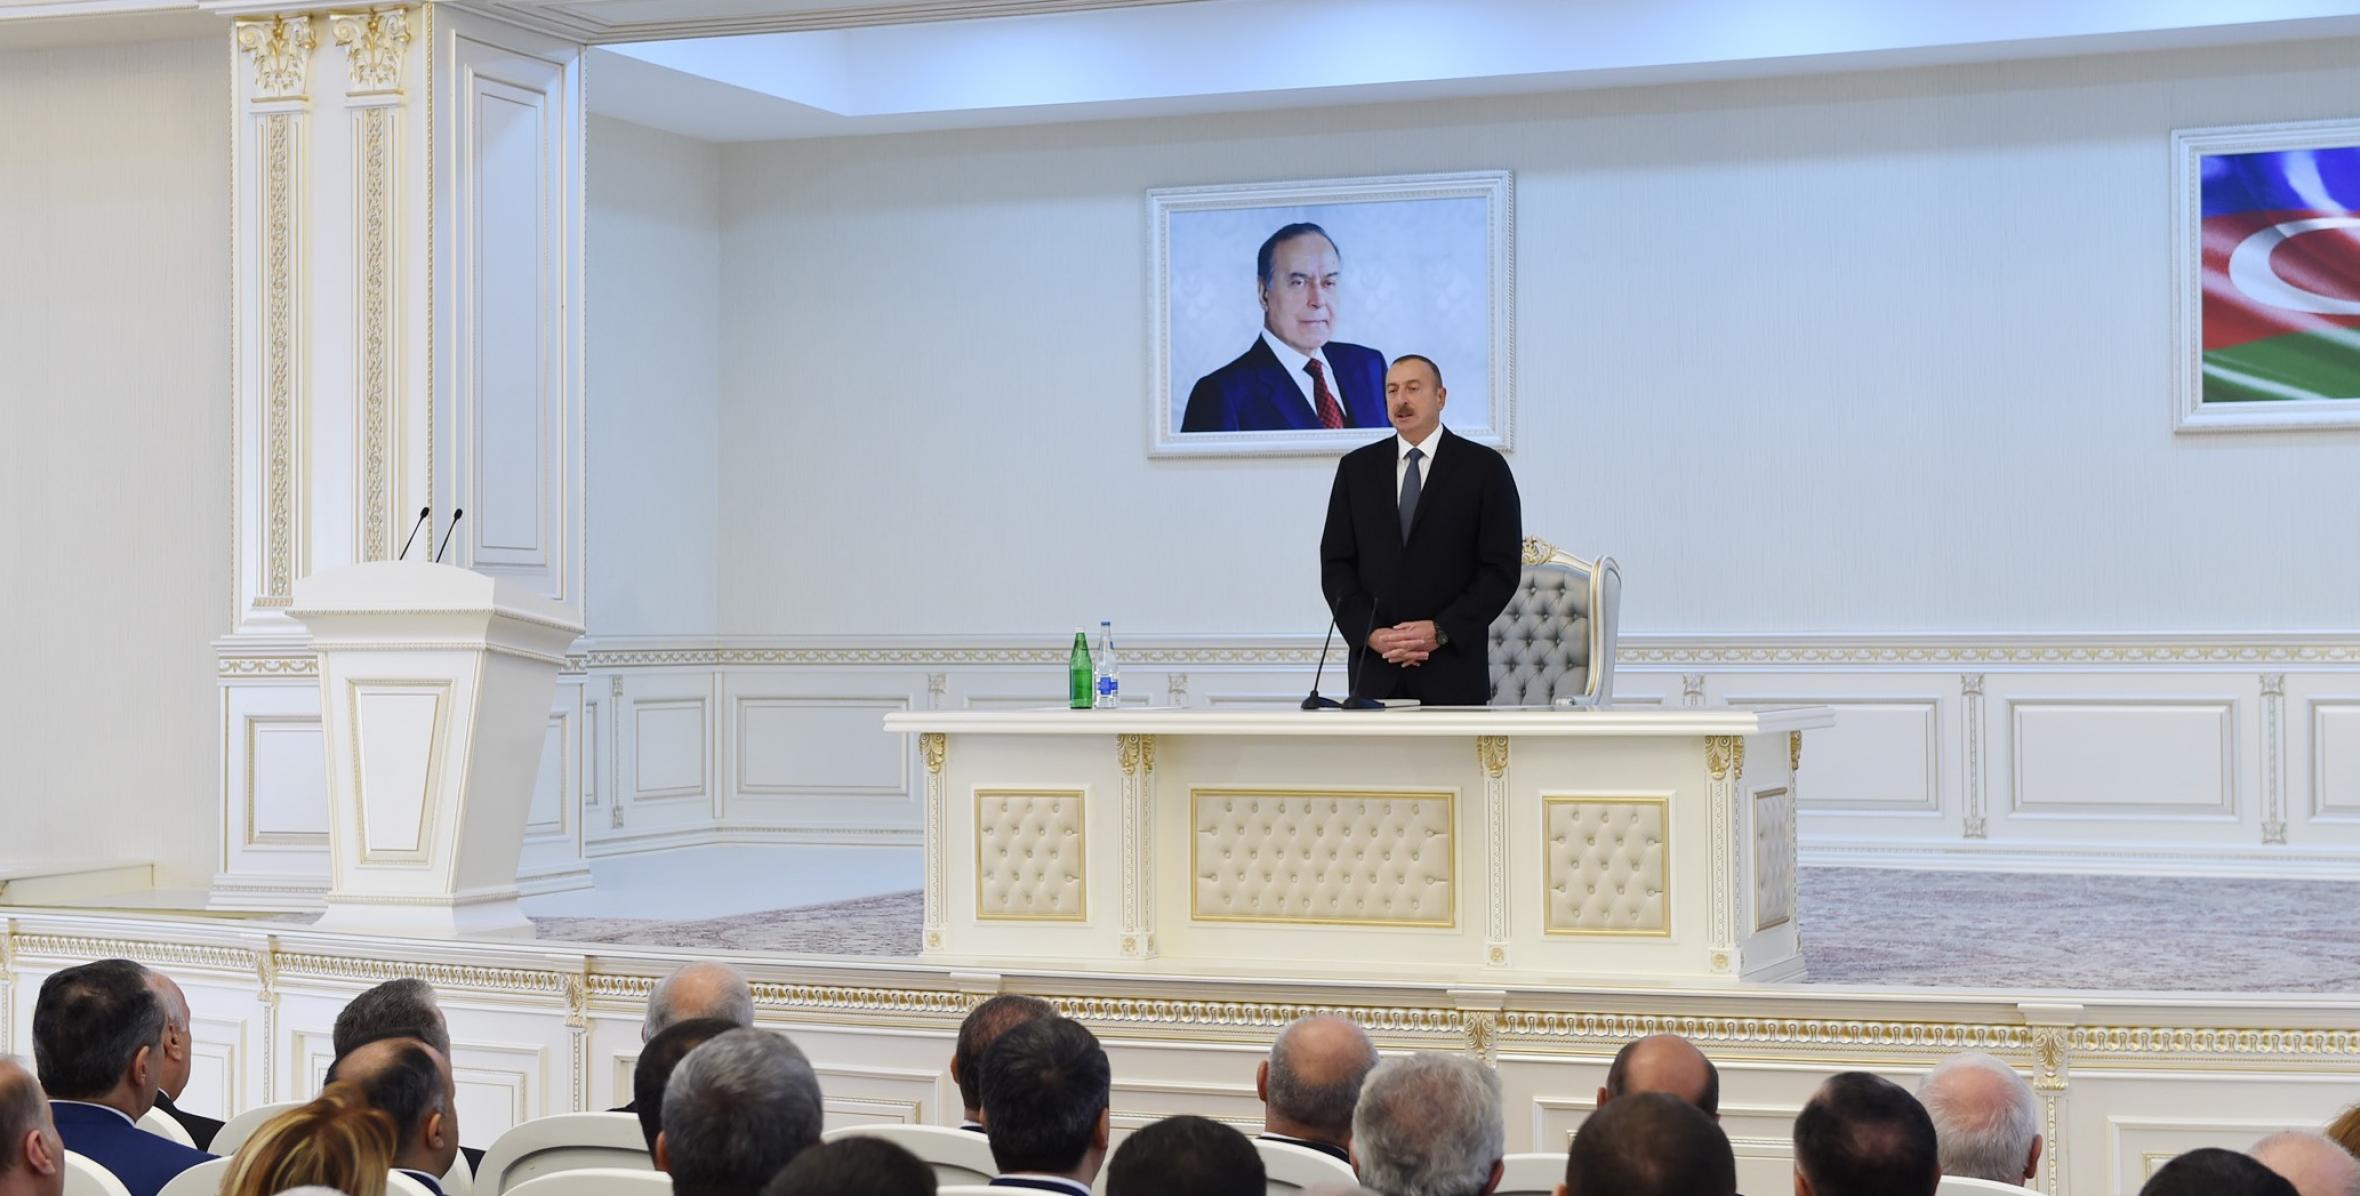 Opening speech by Ilham Aliyev at the opening  Heydar Aliyev Center in Sumgayit